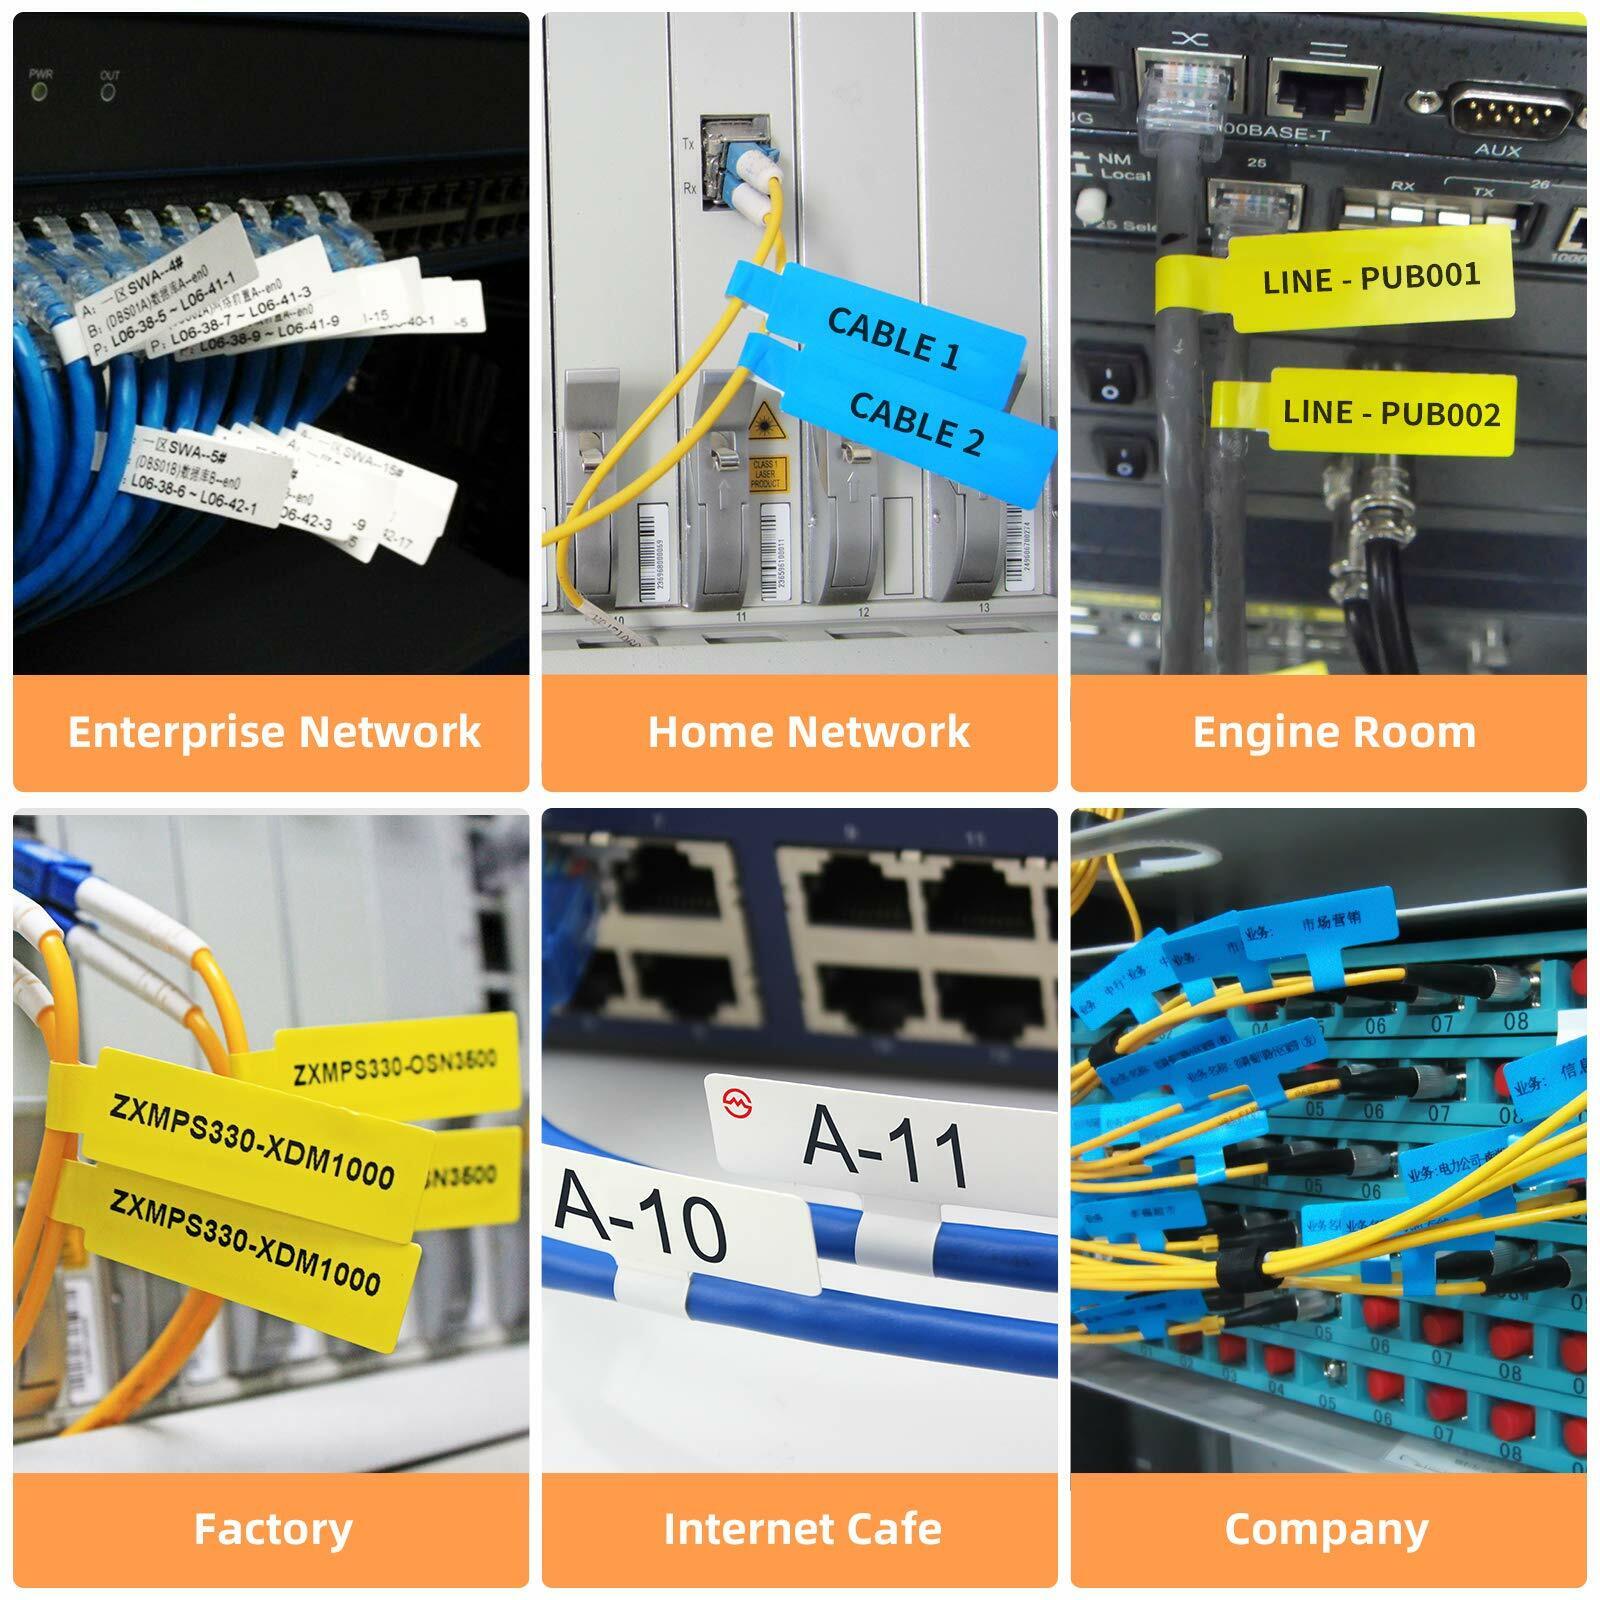 NIIMBOT 热敏标签电缆标签纸适用于 D11/D101/D110